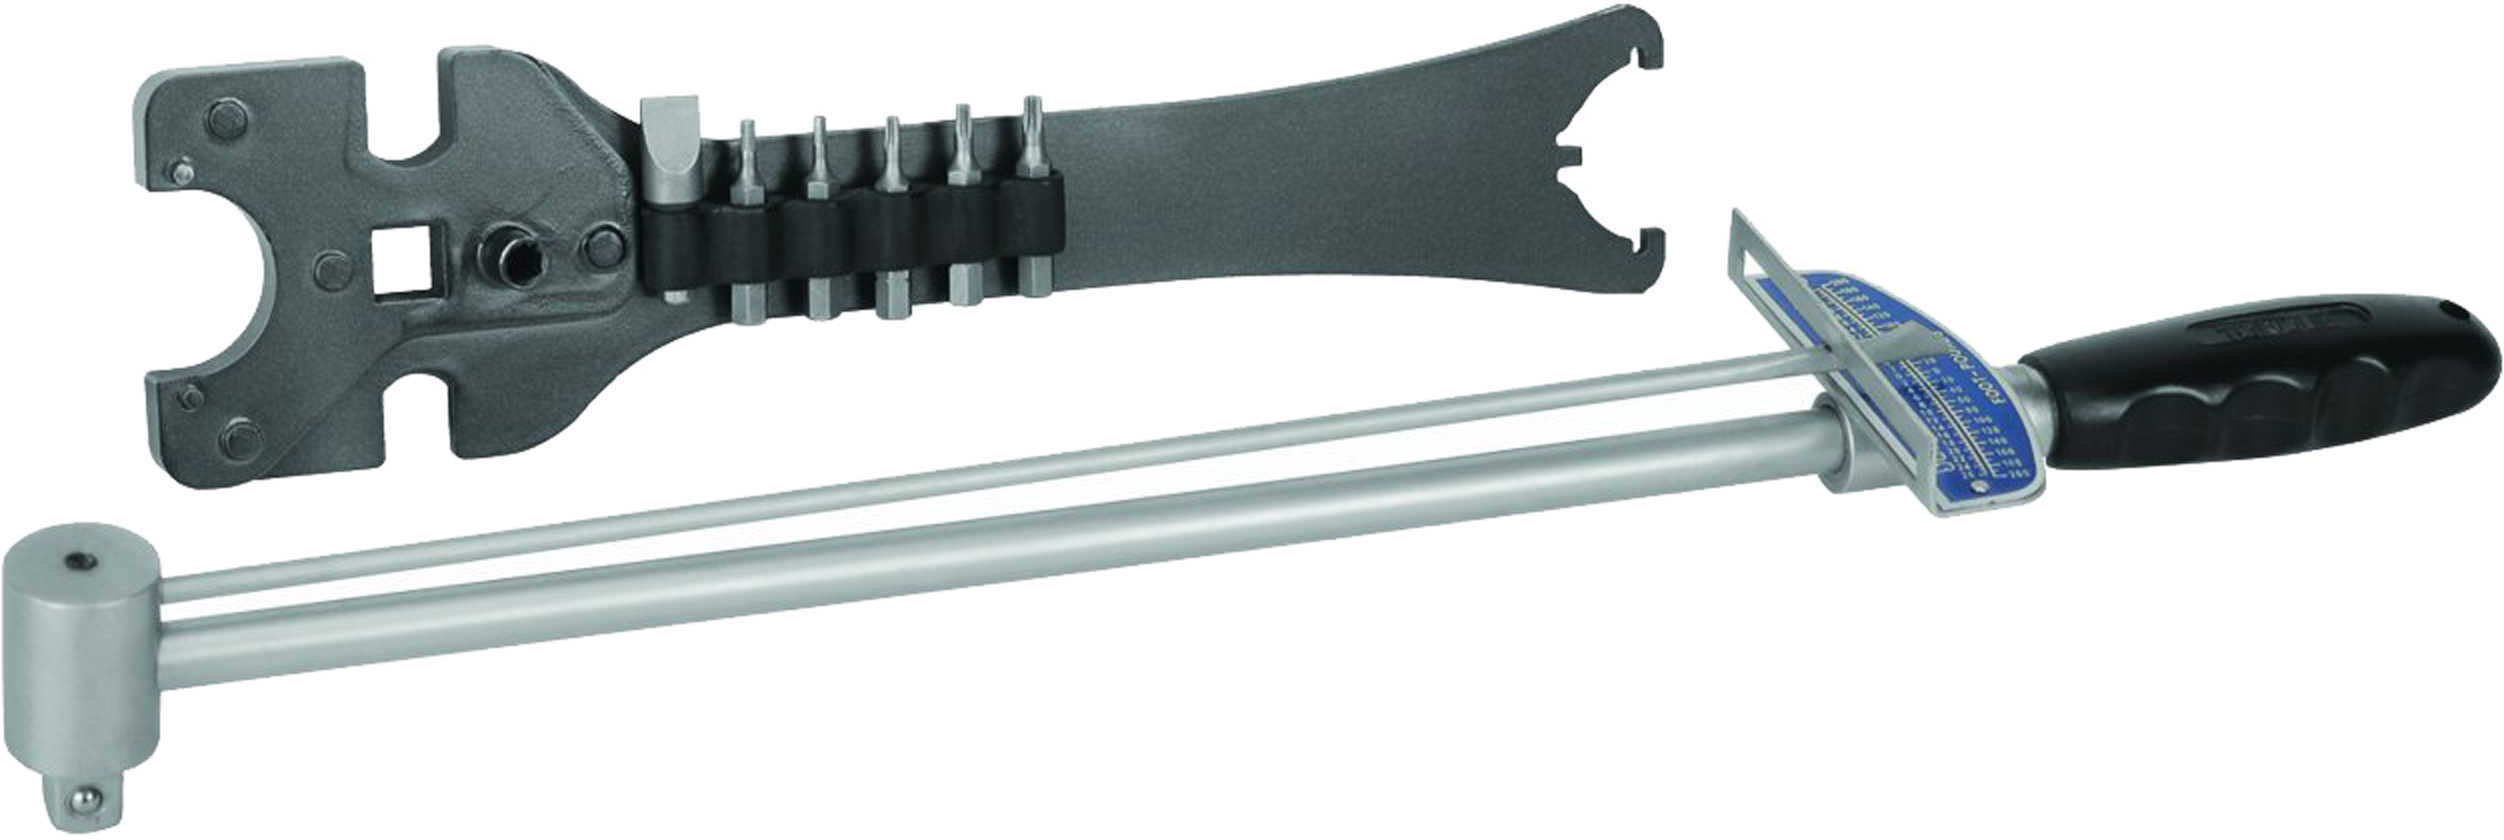 Wheeler Delta Series AR Combo Tool W/ Torque Wrench 156700